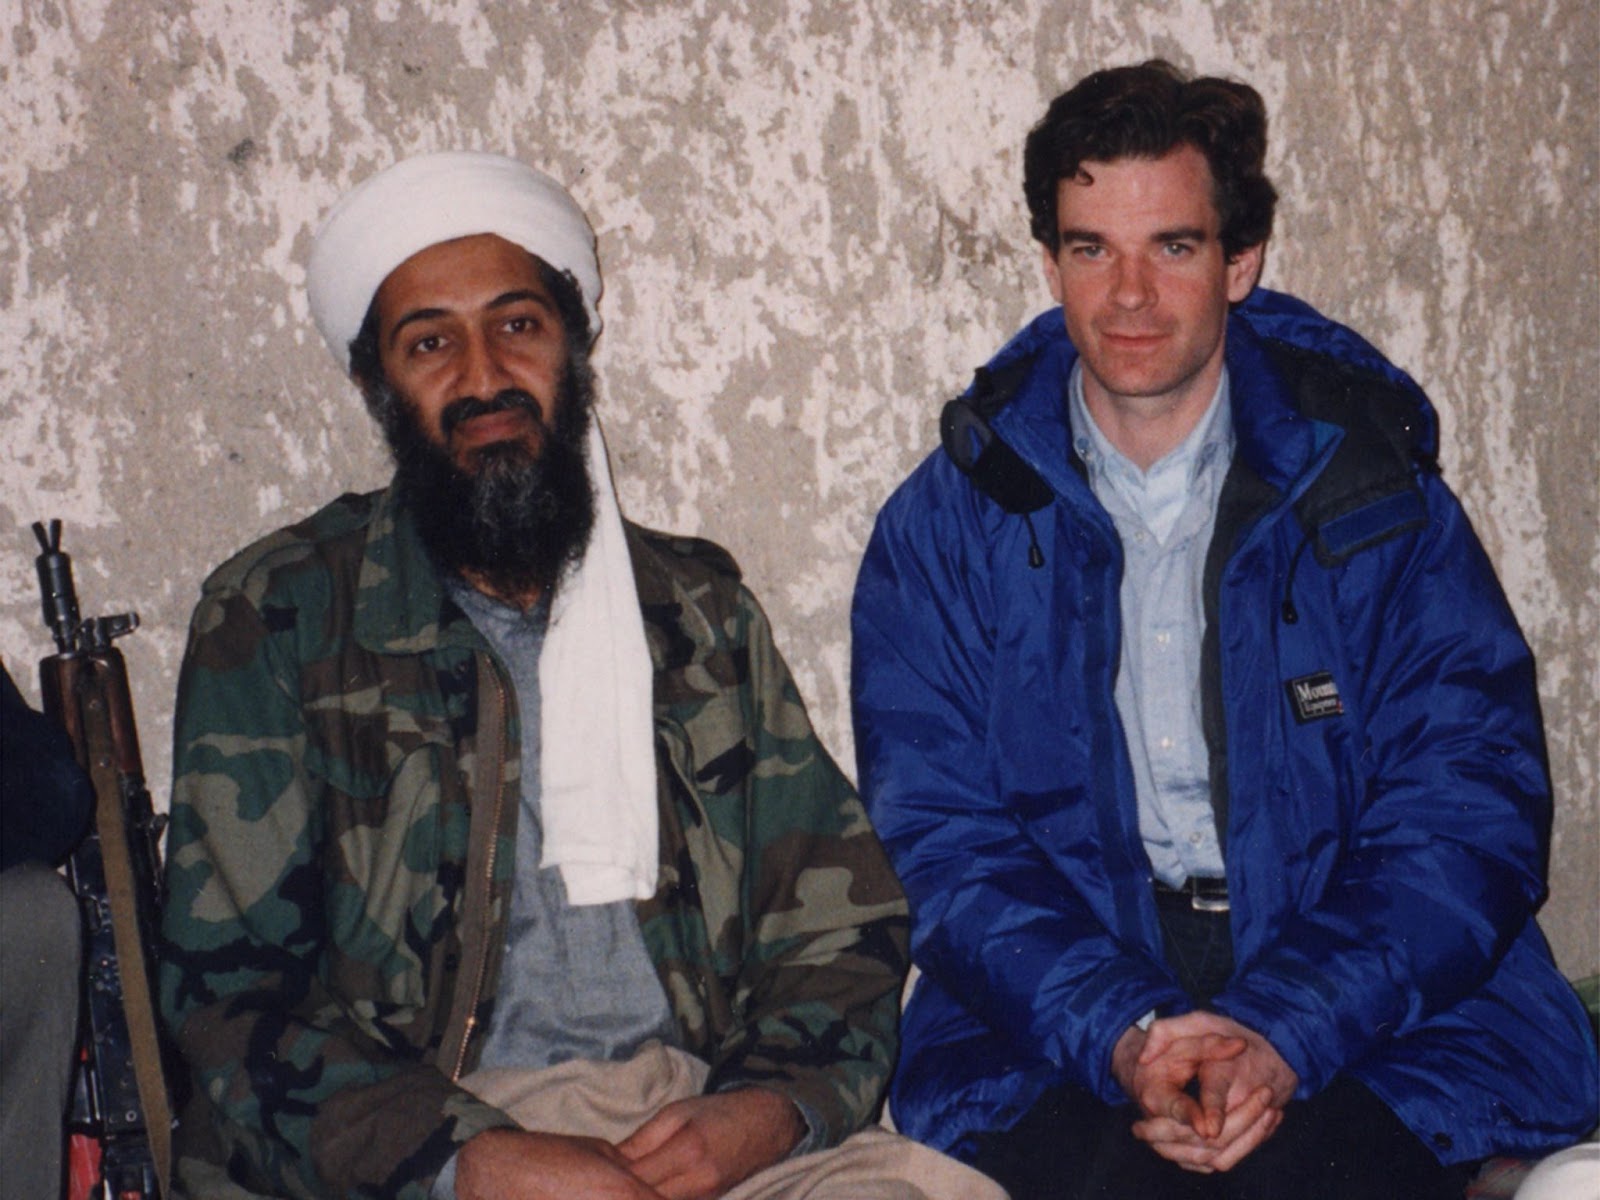 CNN Journalist Peter Bergen and Osama bin Laden in 1997